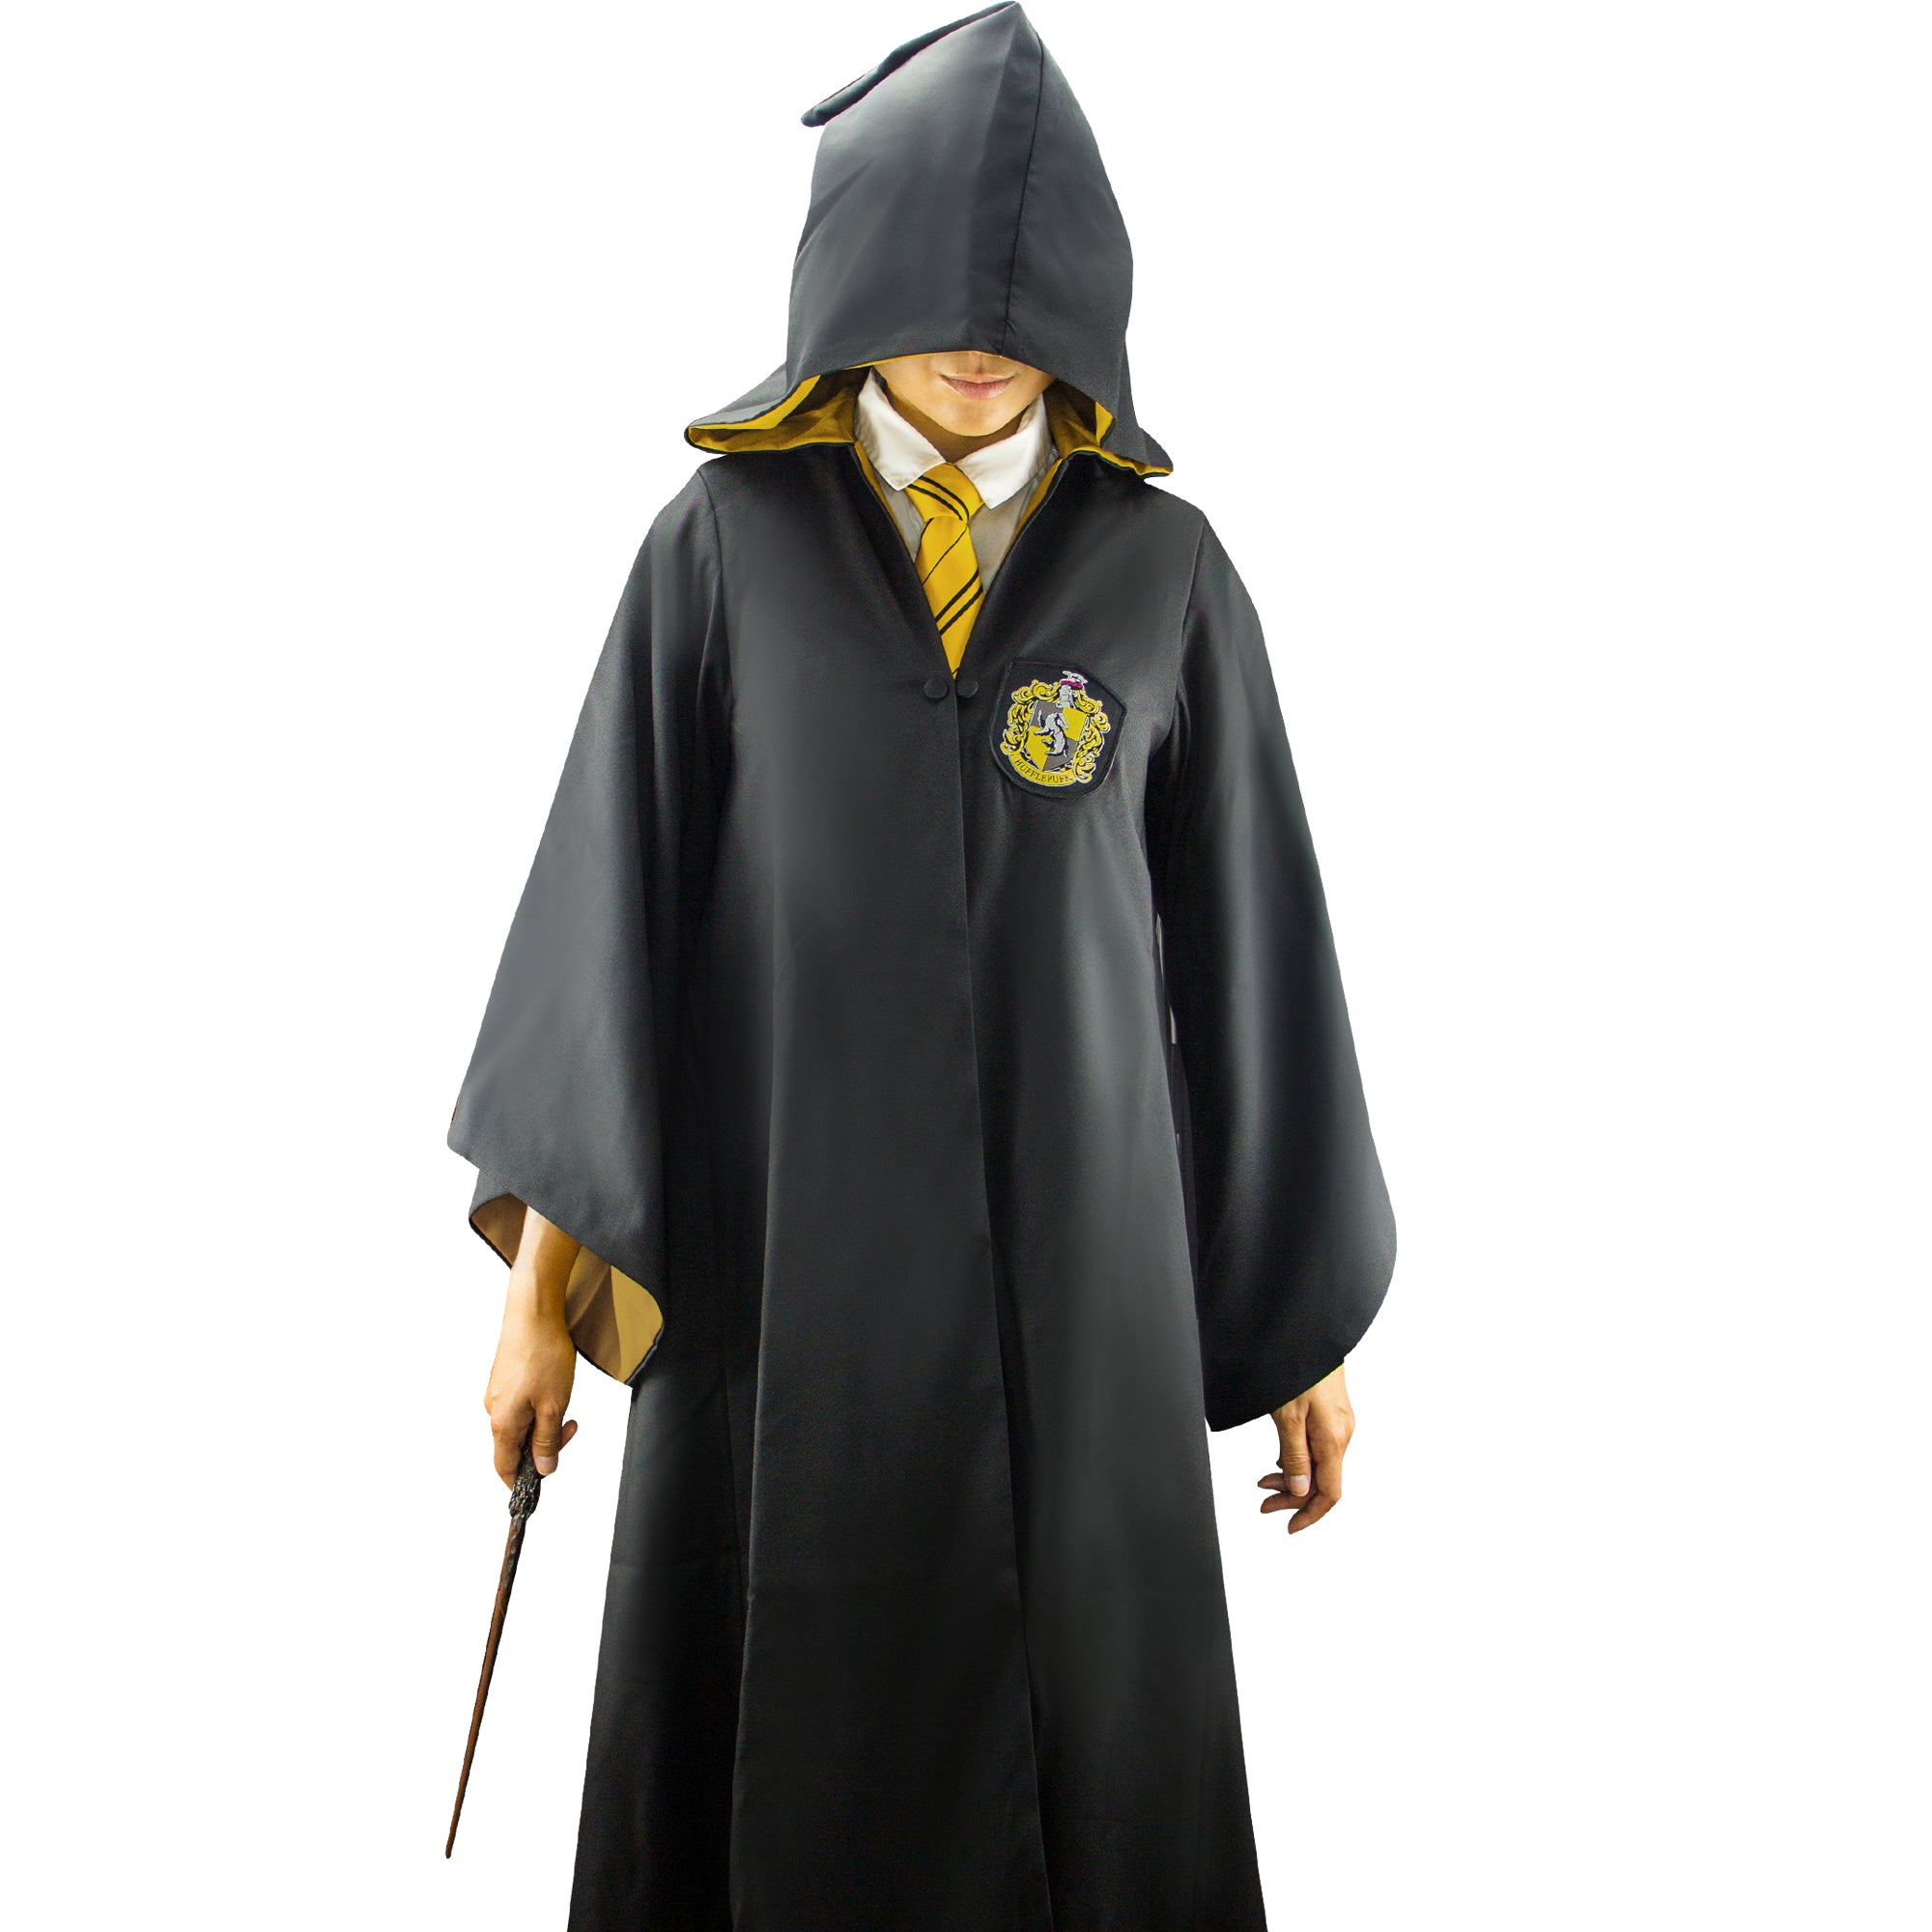 Halloweentown Store: Harry Potter Slytherin Robe Adult Deluxe Costume